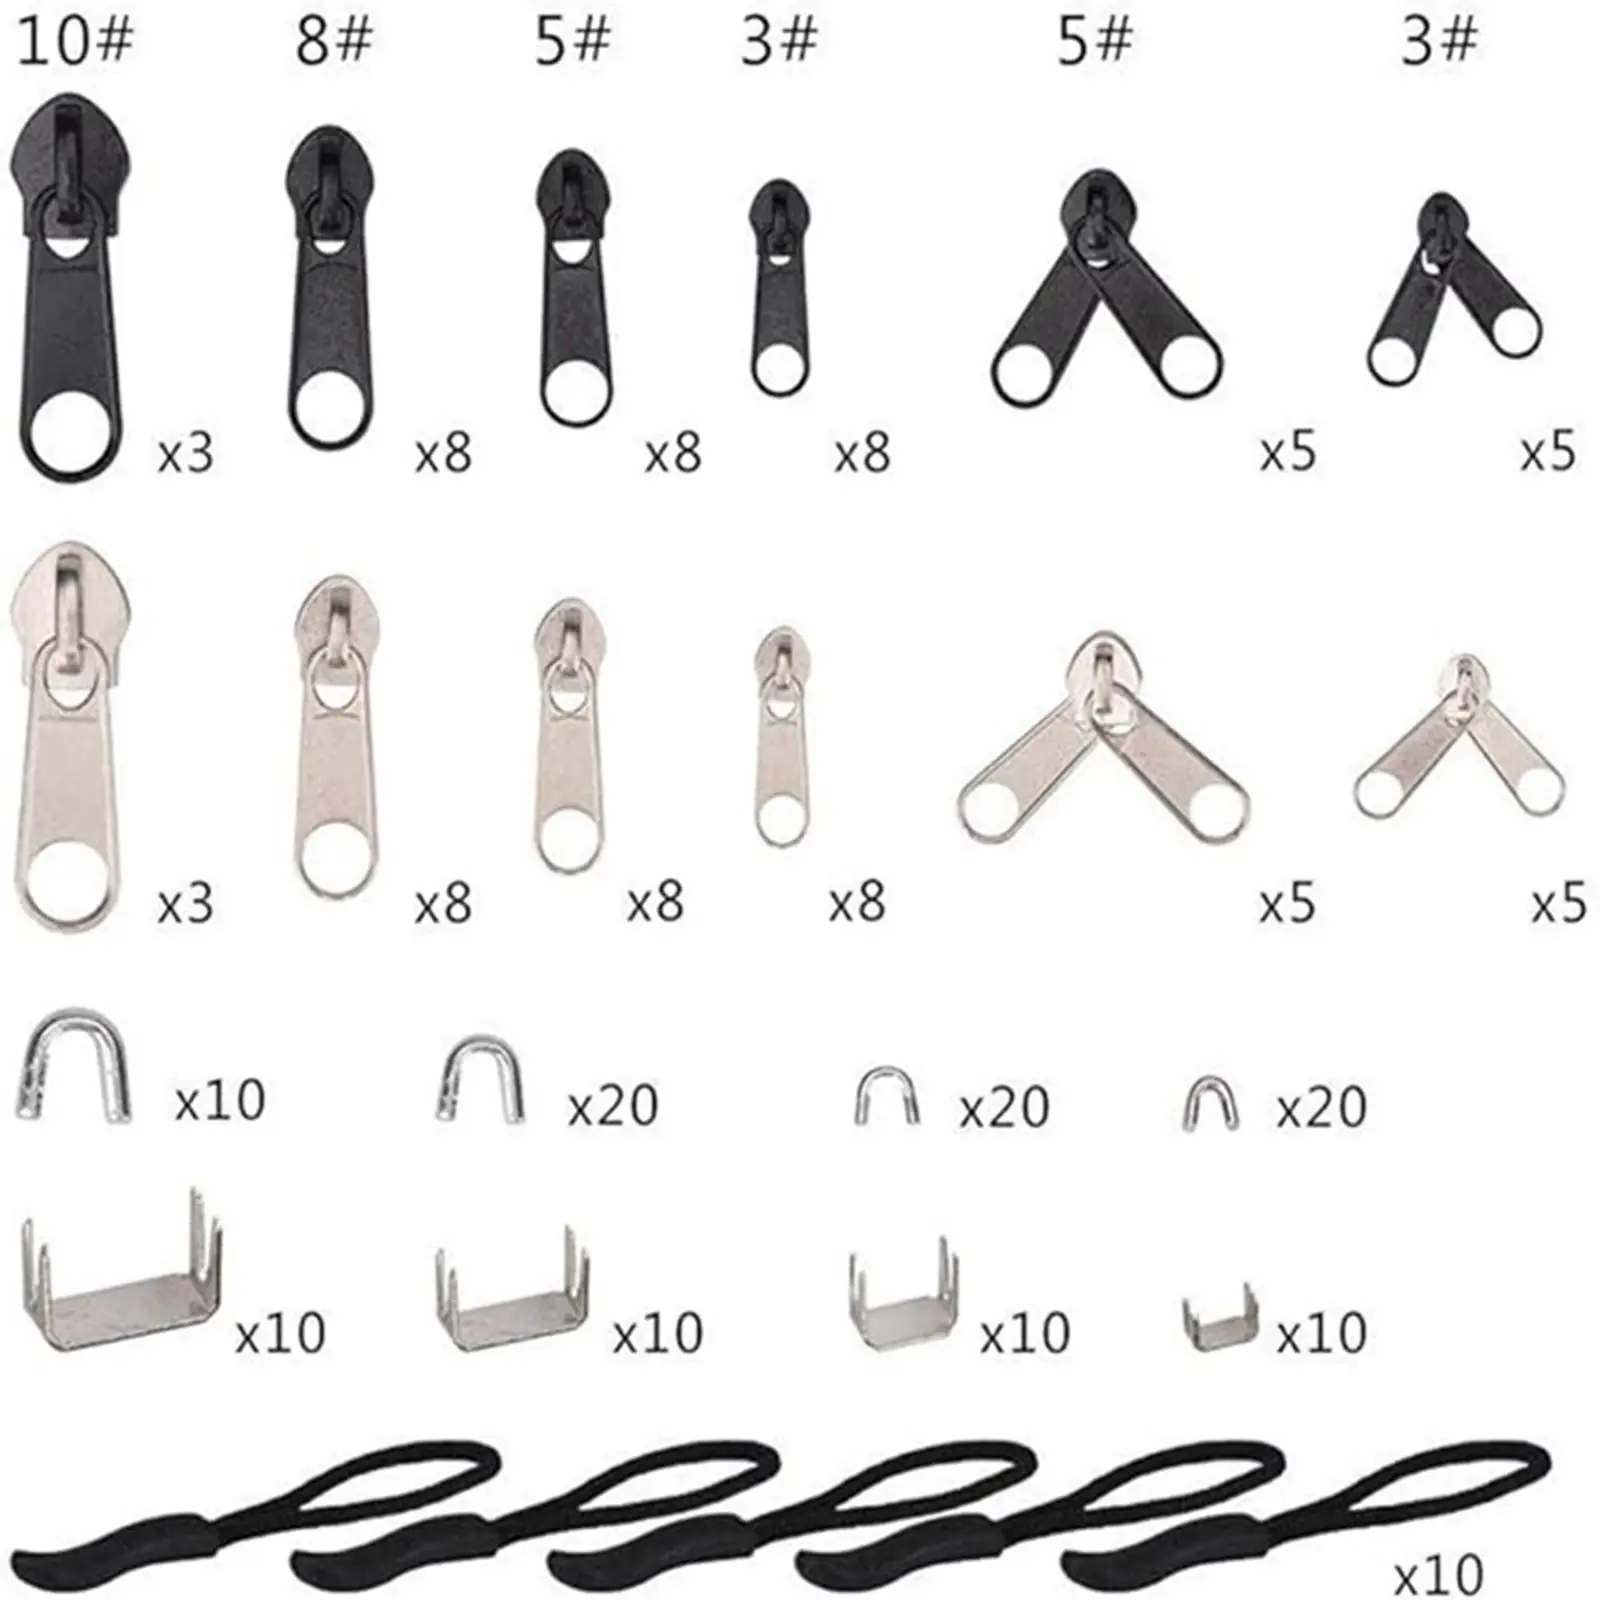 197Pcs Zipper Repair Kits Replacement Craft Metal Manual DIY Sewing Zipper Pull for Sleeping Bag Luggage Jeans Coats Clothes